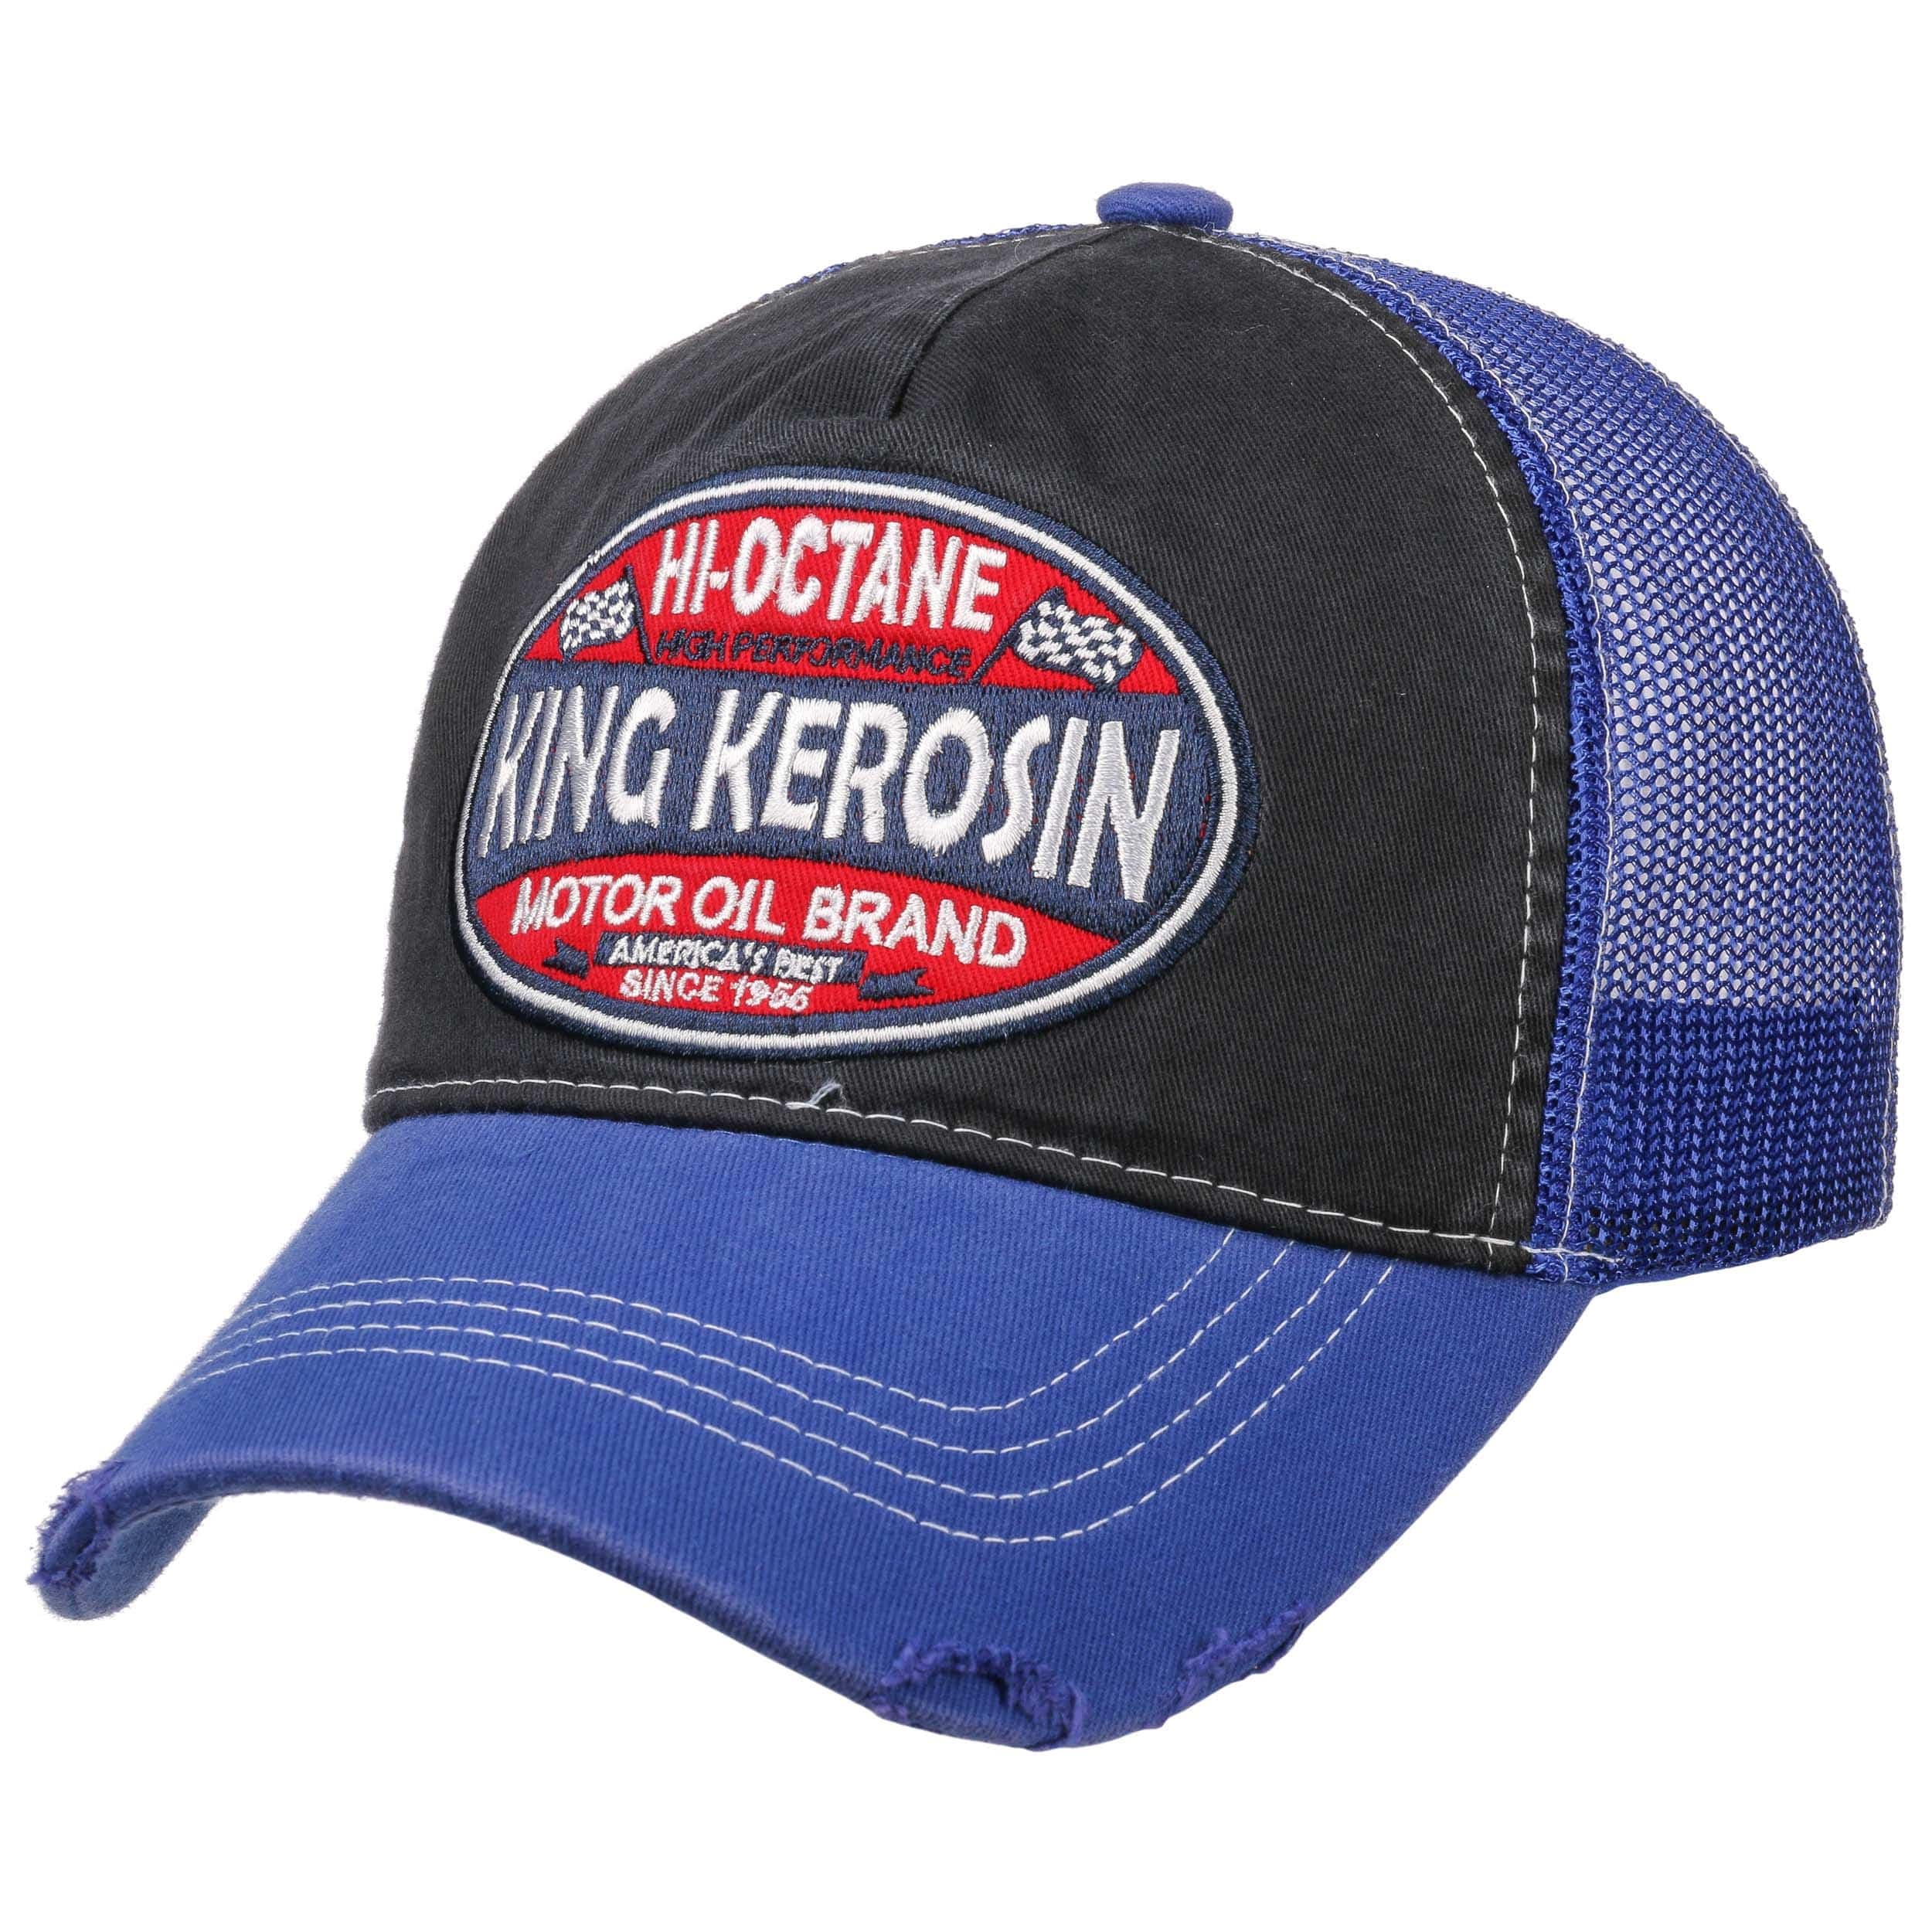 KING KEROSIN Motor Oil Vintage Trucker Cap Truckercap Meshcap Basecap